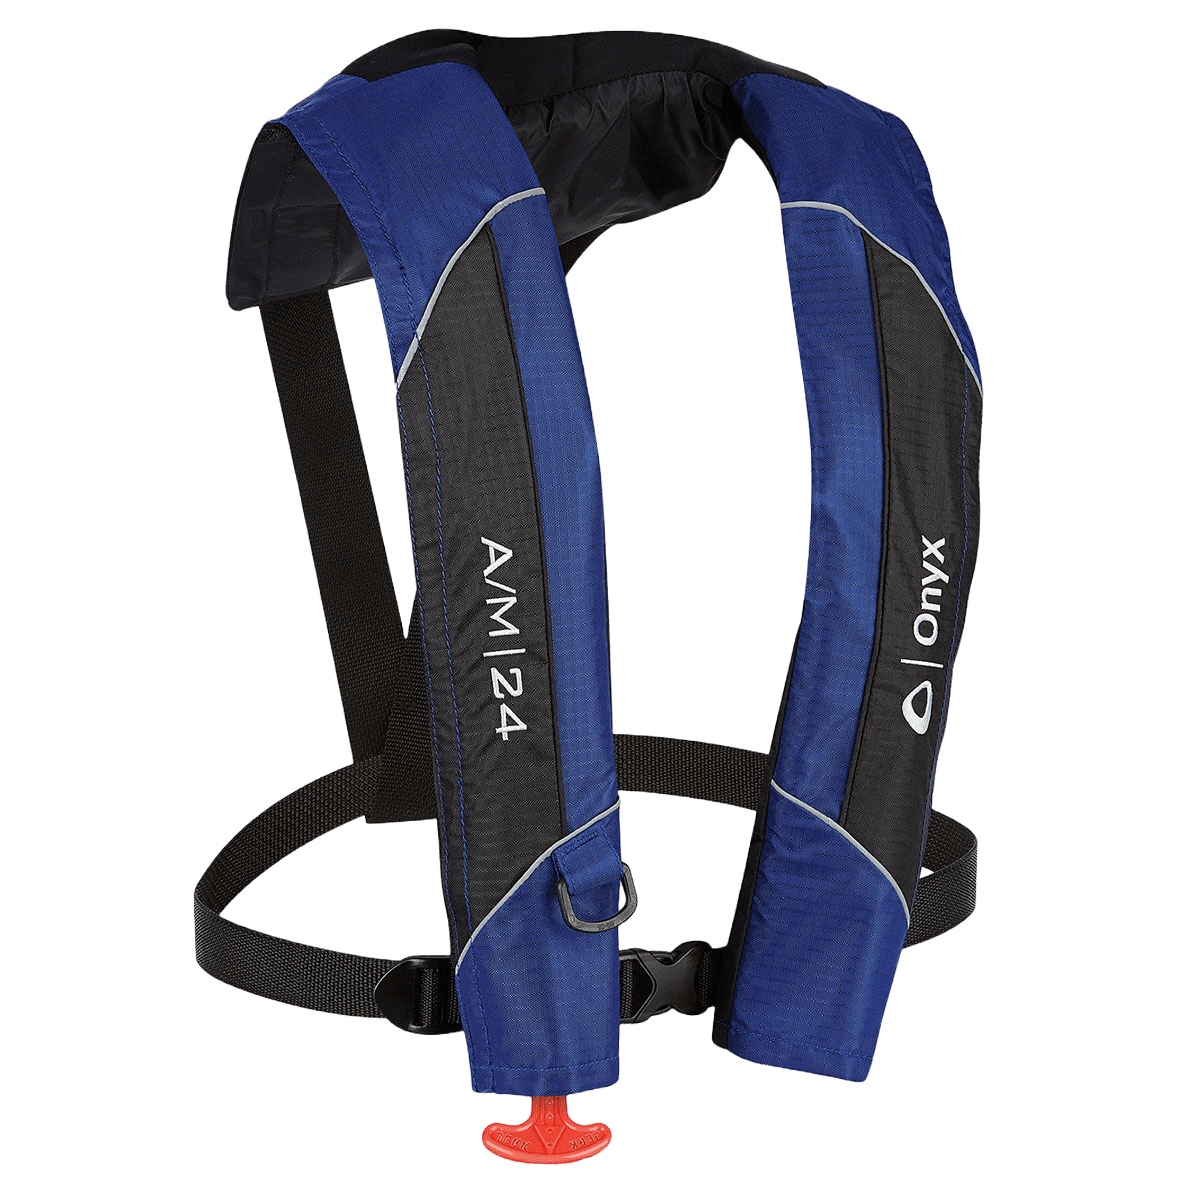 Onyx - A/M-24 Auto/Manual Inflatable Life Jacket Onyx Blue 